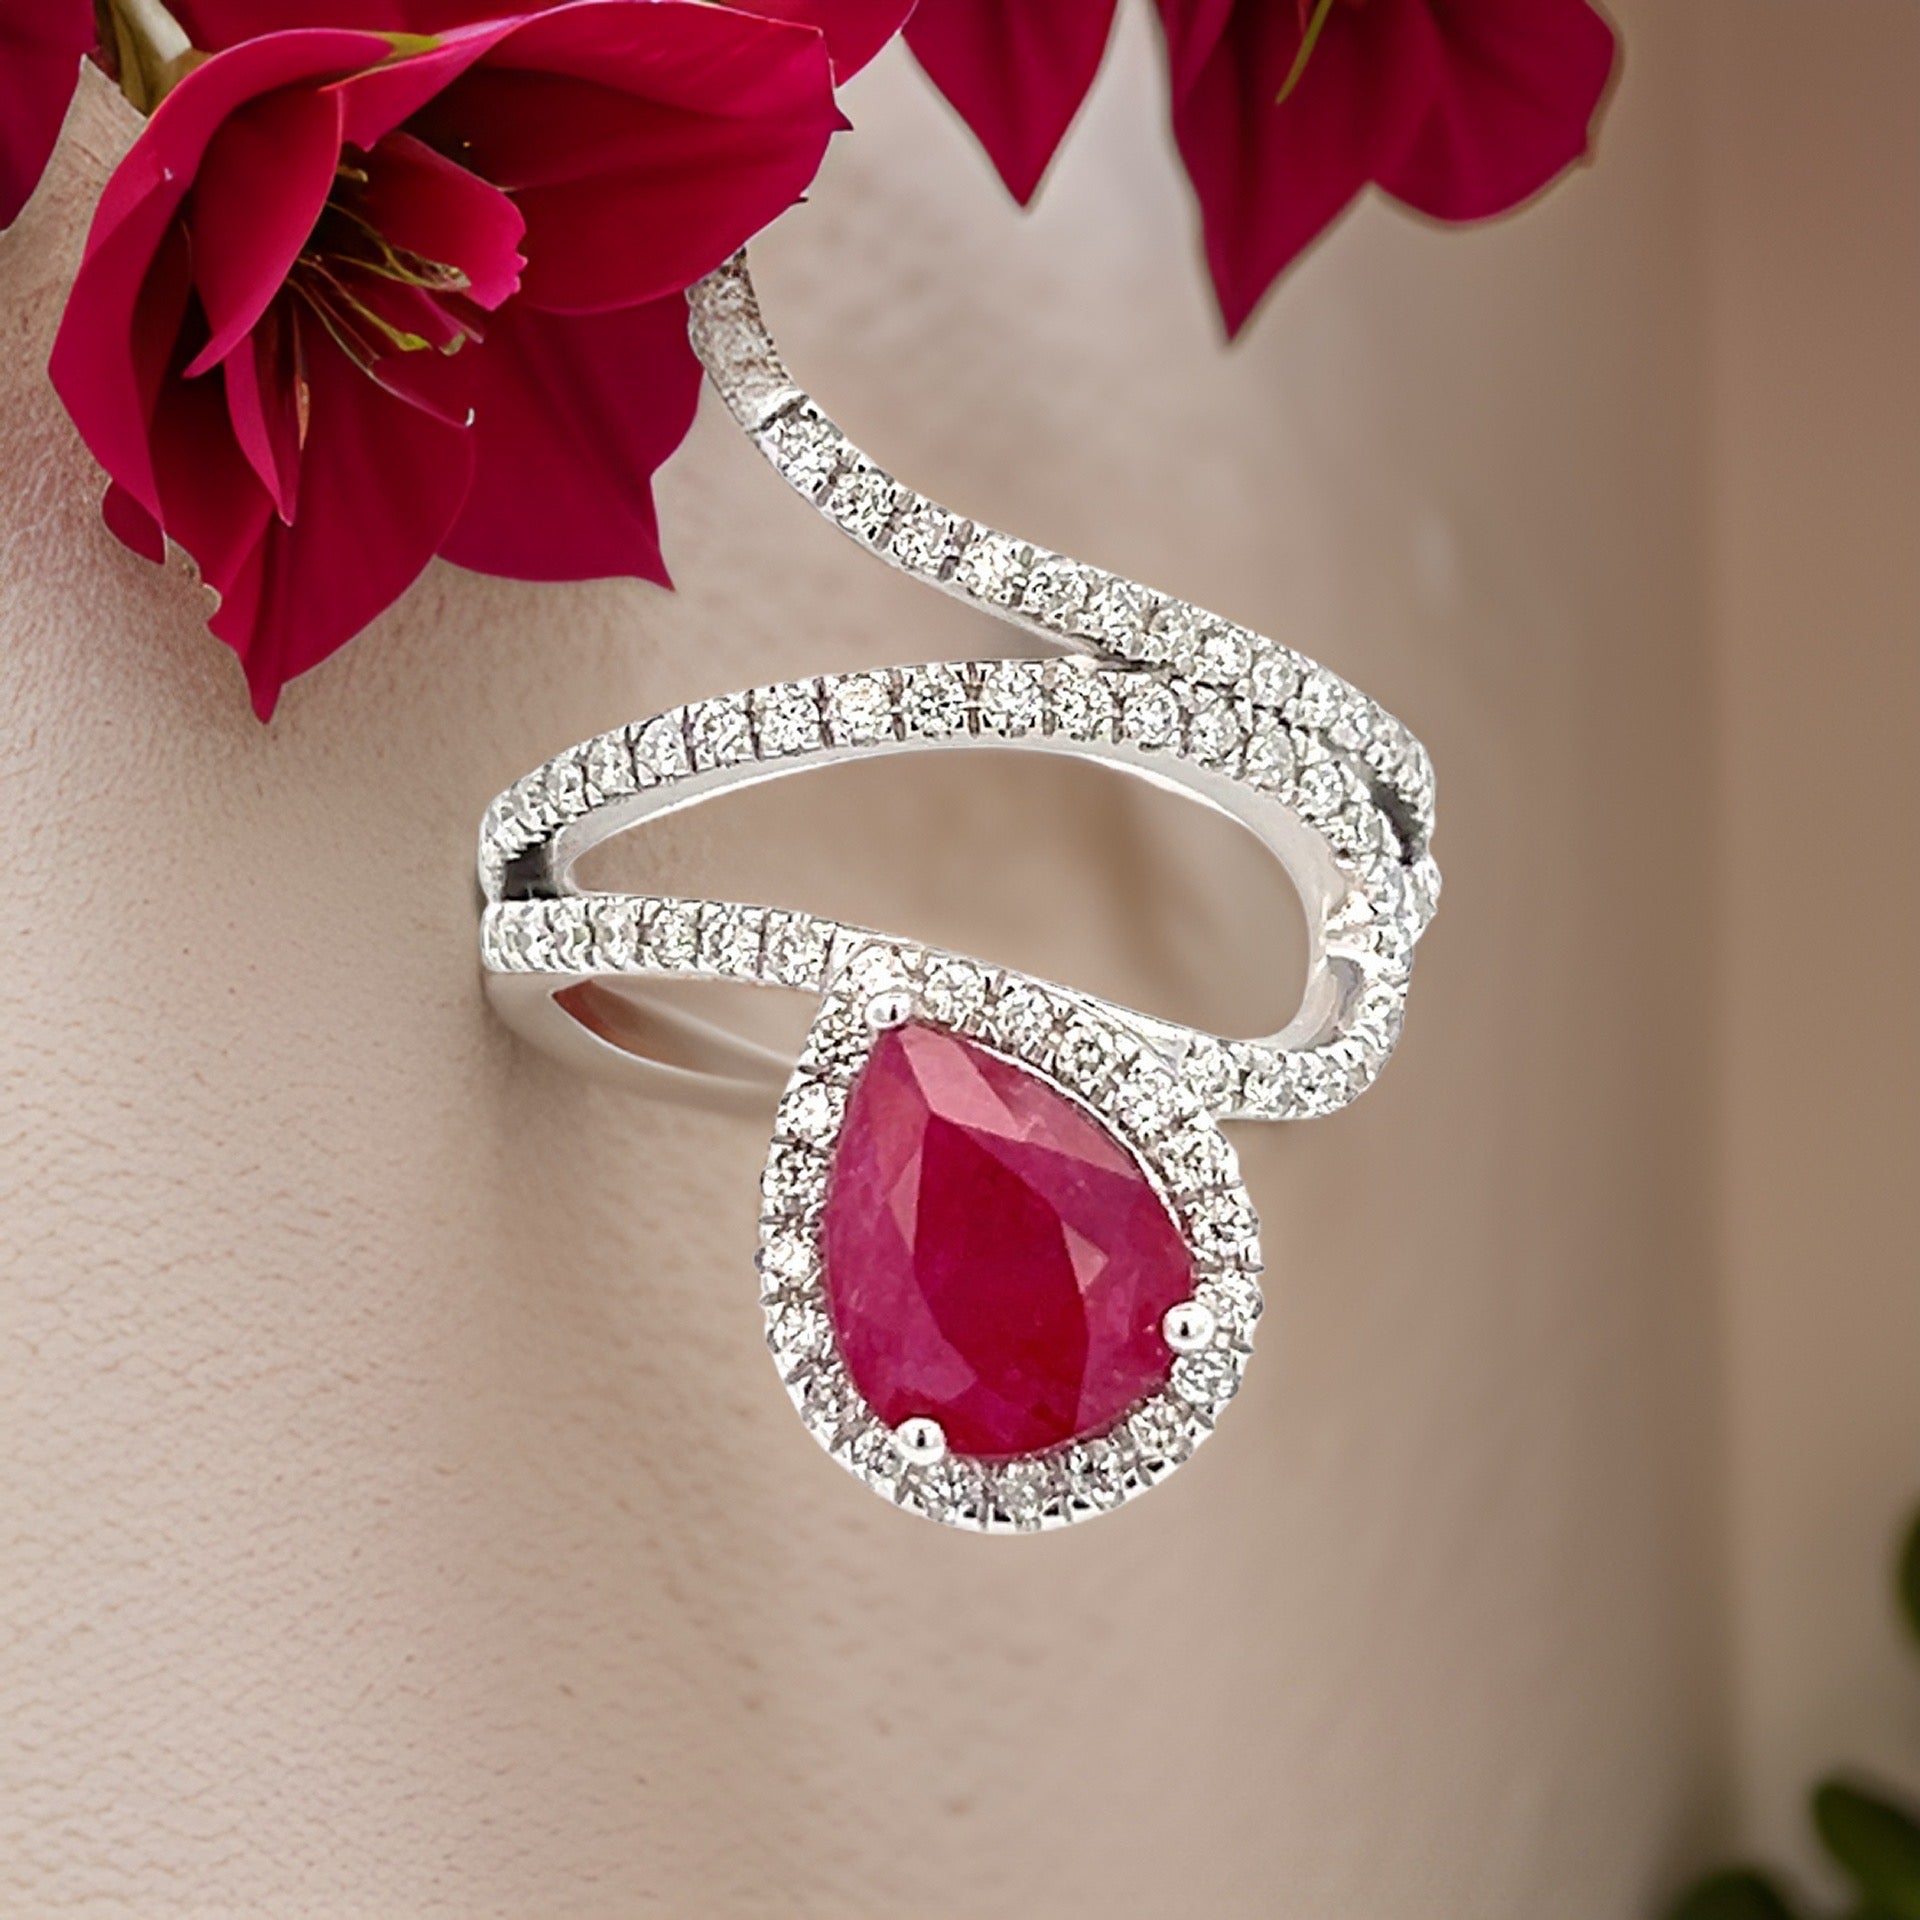 Natural Ruby Diamond Ring 6.75 14k W Gold 2.32 TCW Certified $5,950 310542 - Certified Fine Jewelry